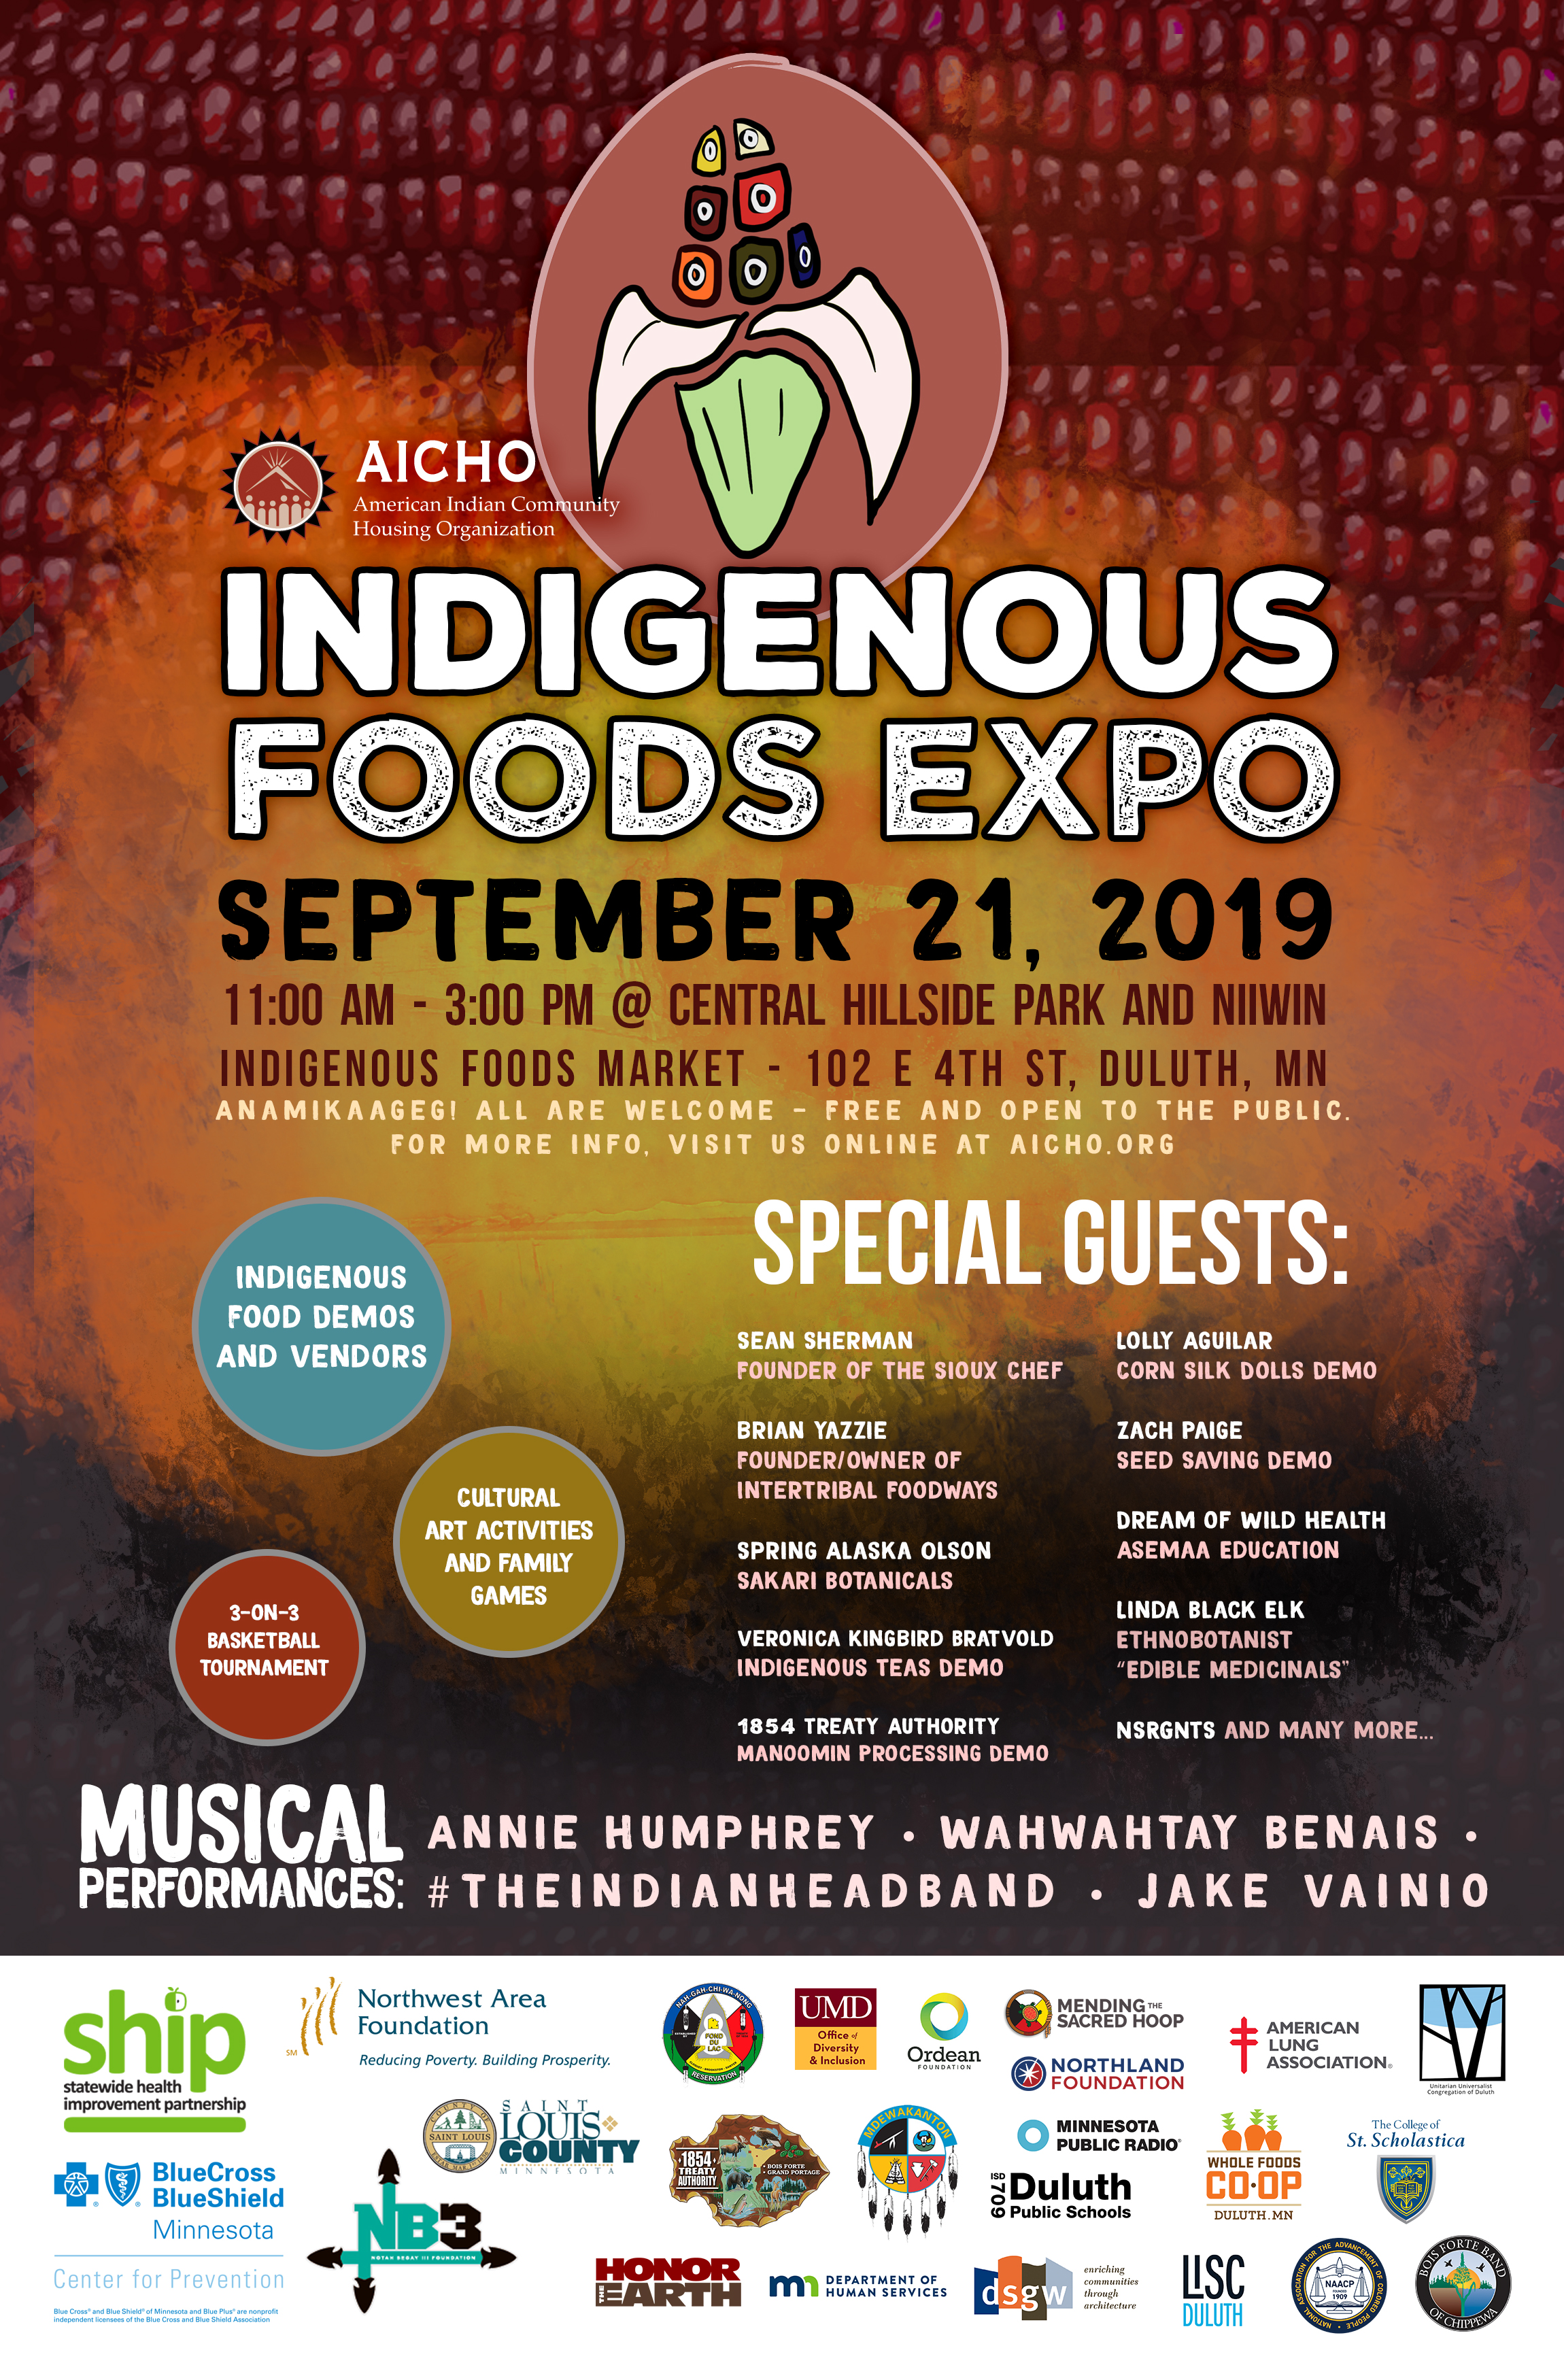 Indigenous Food & Art Markets - AICHO